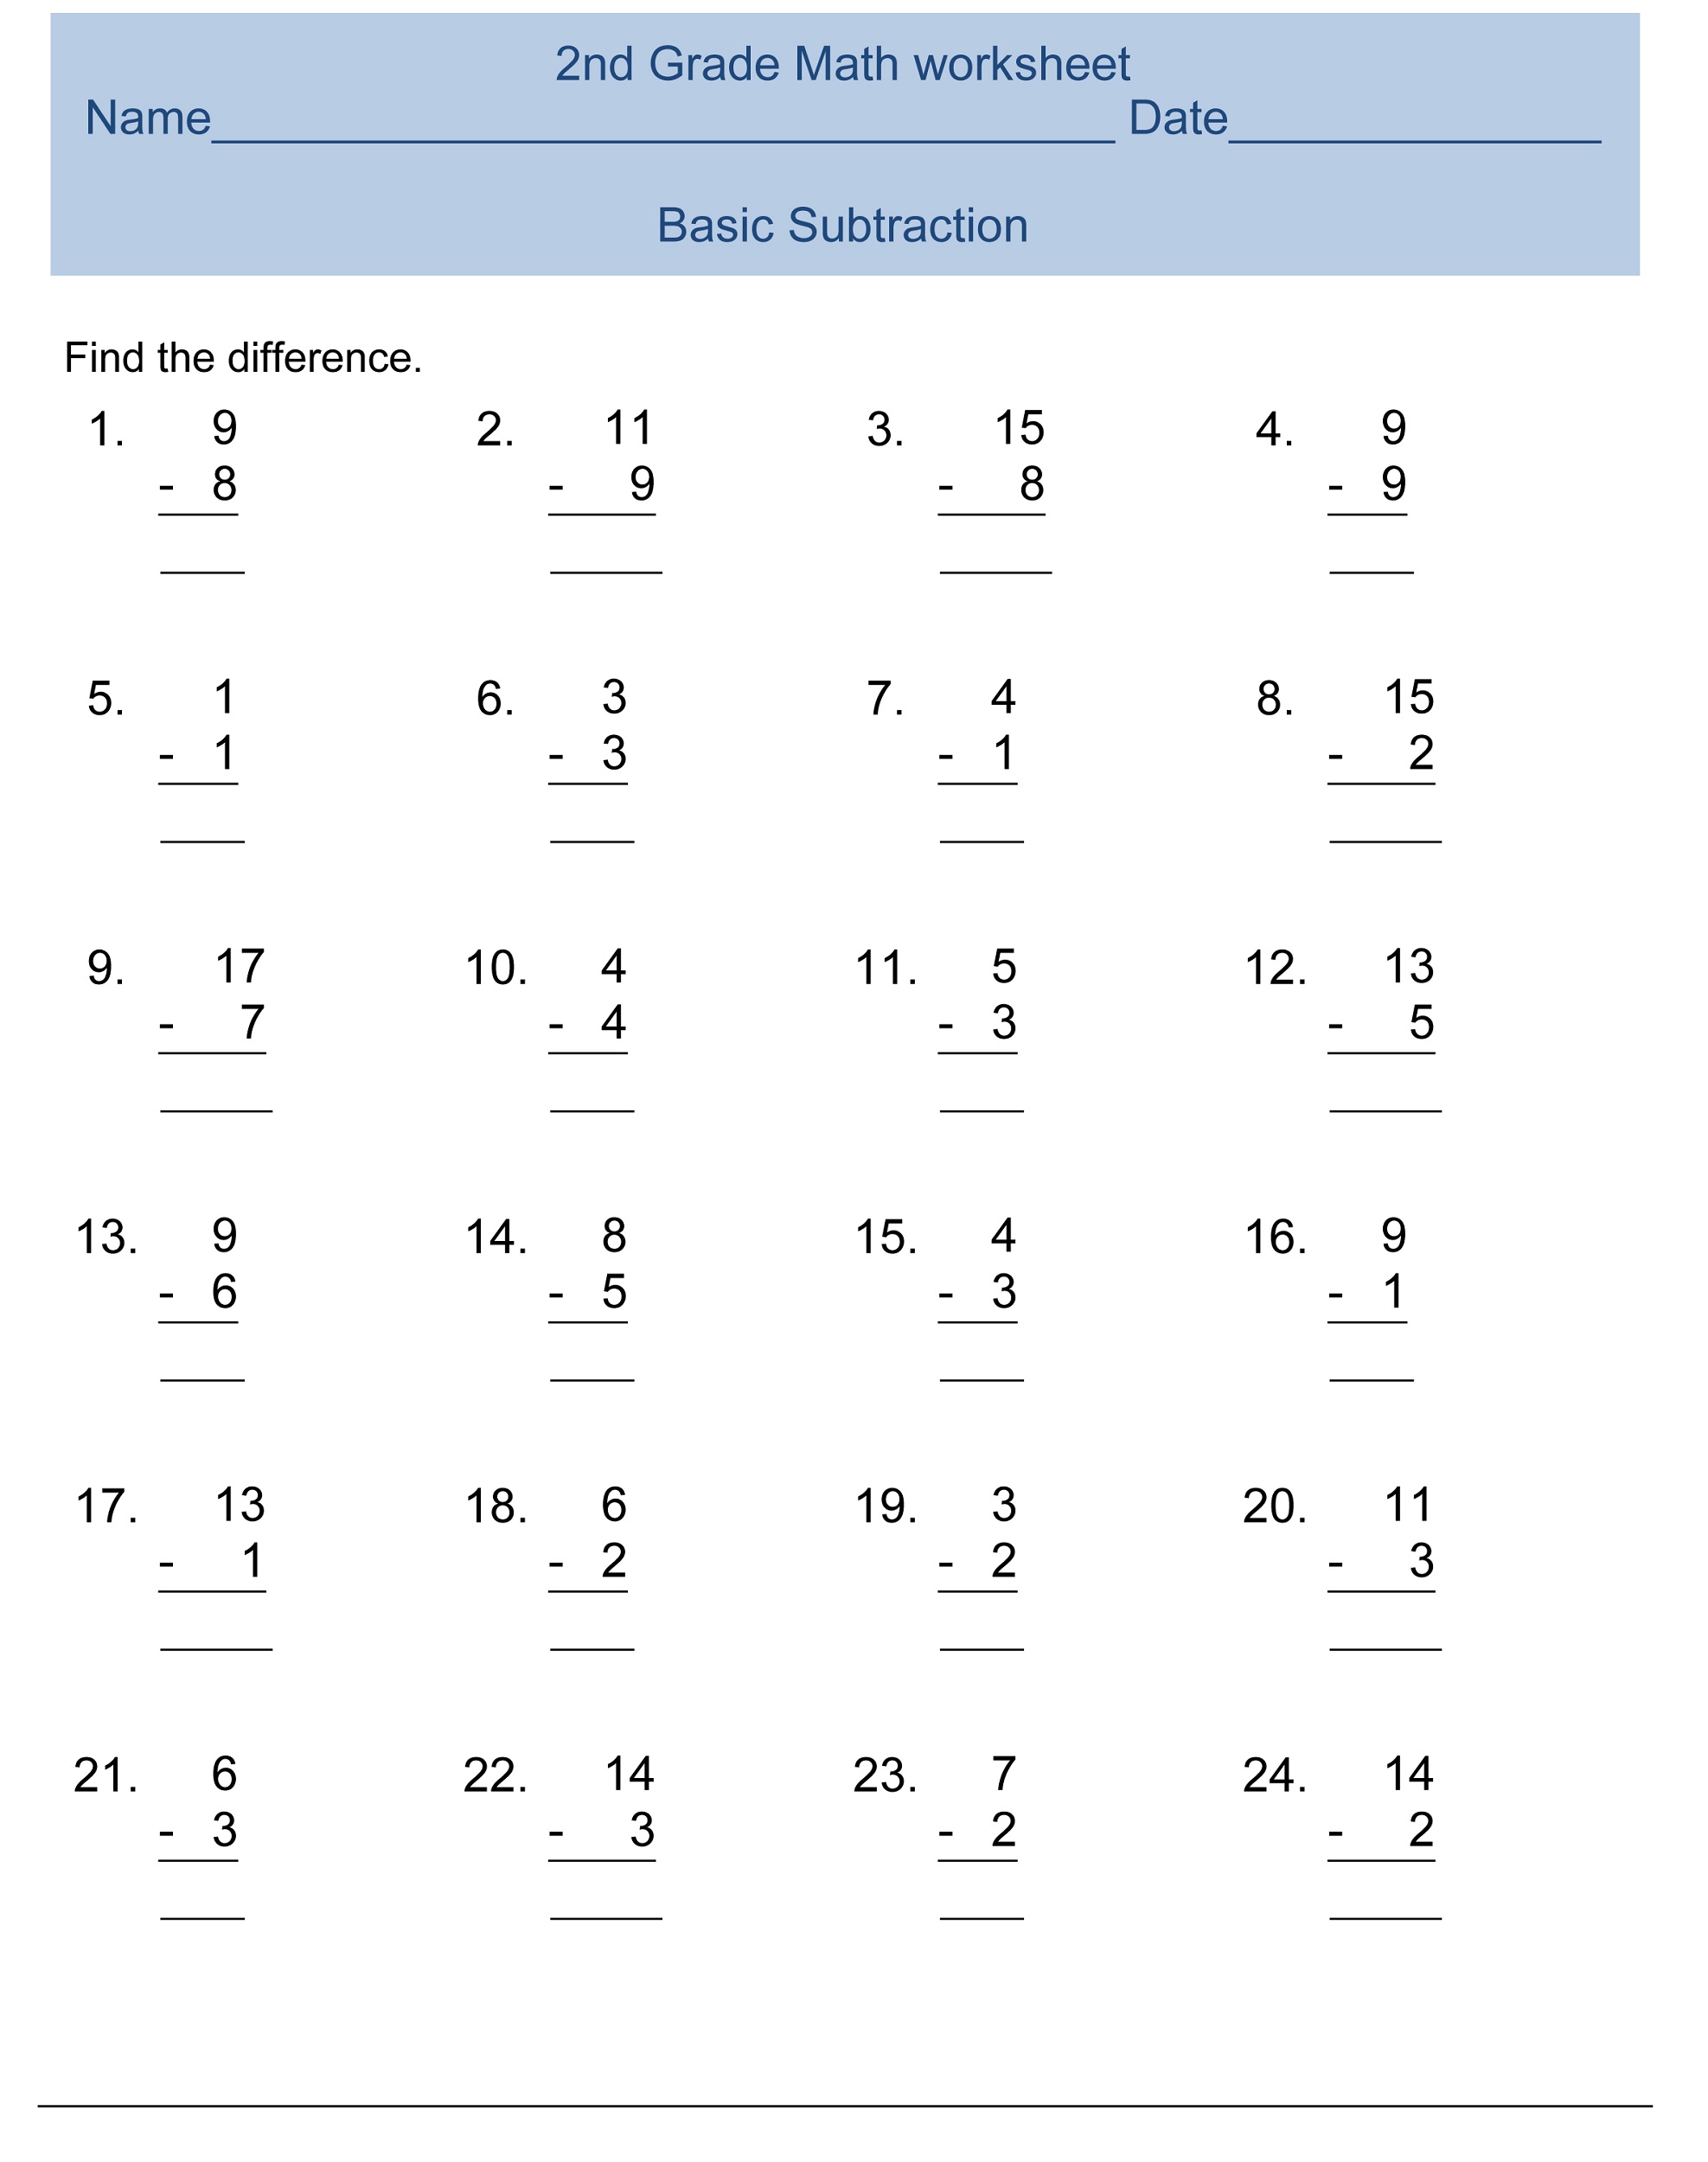 2nd-grade-math-worksheets-nastarans-resources-2nd-grade-math-4-free